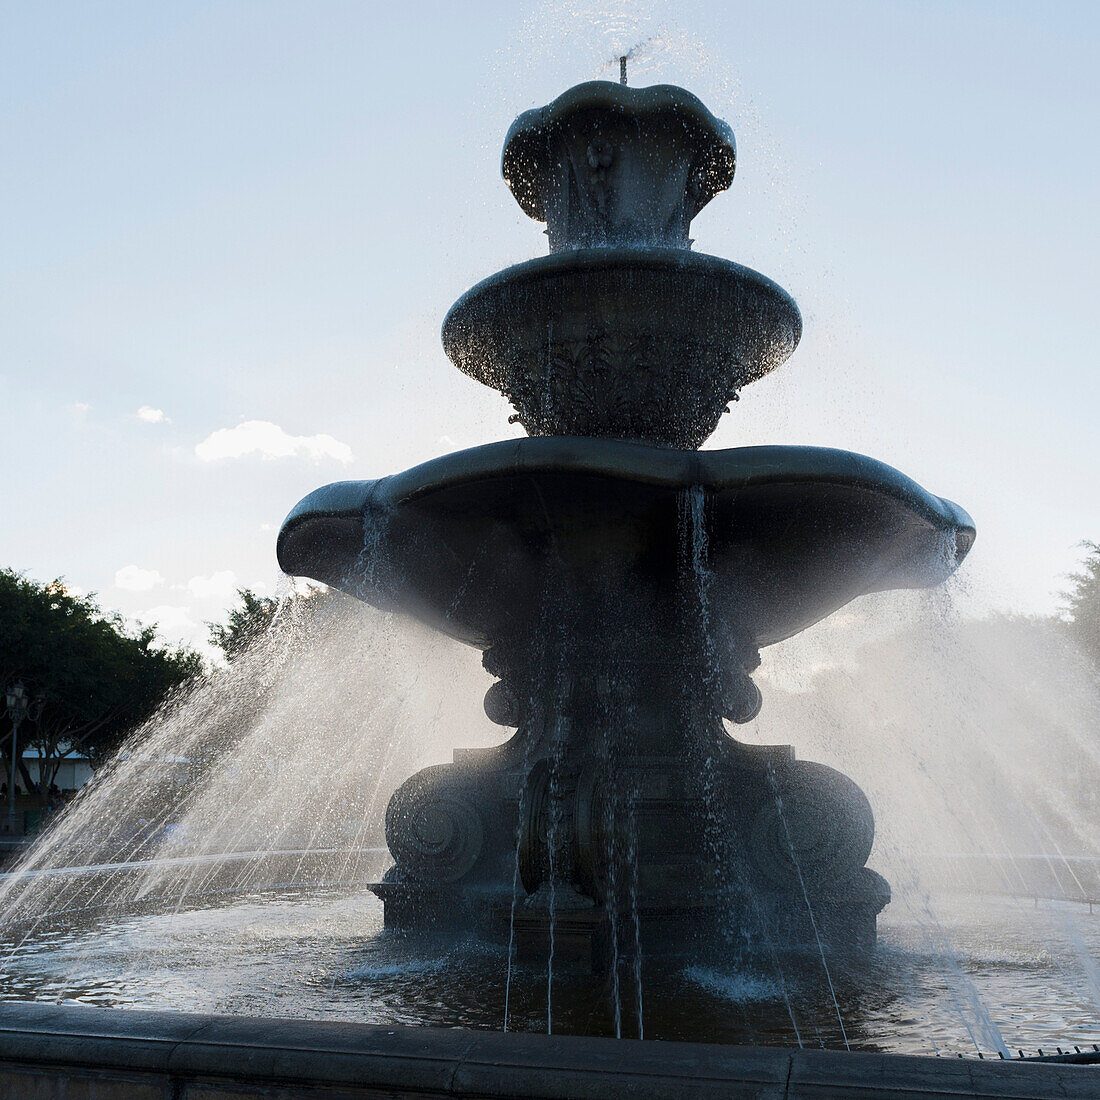 'Water spraying from a water fountain;Guatemala city guatemala'